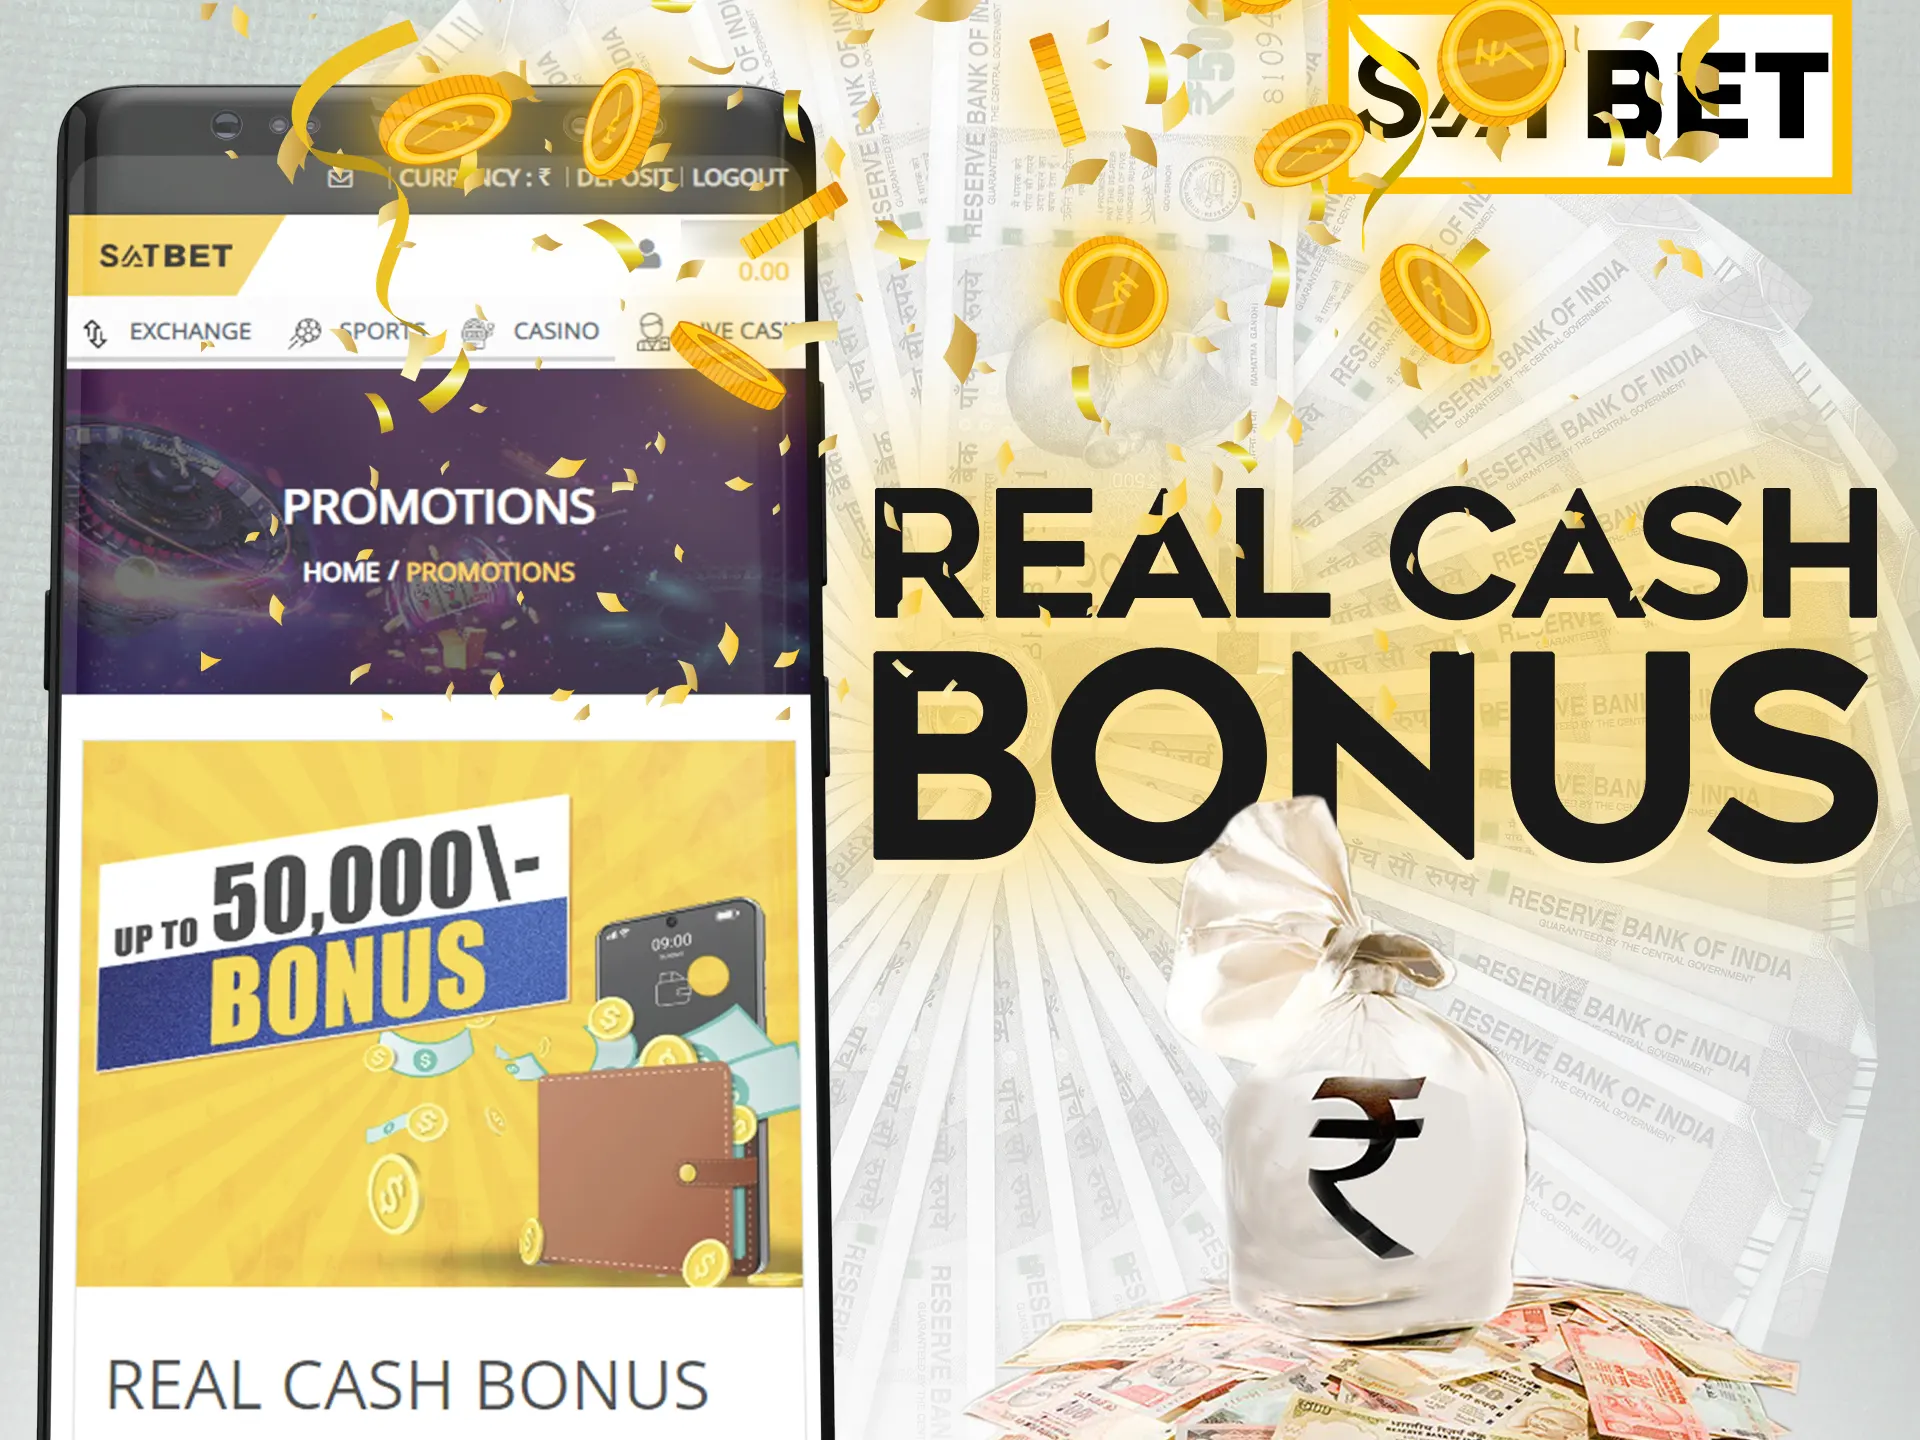 Get your Satbet real cash bonus in app.